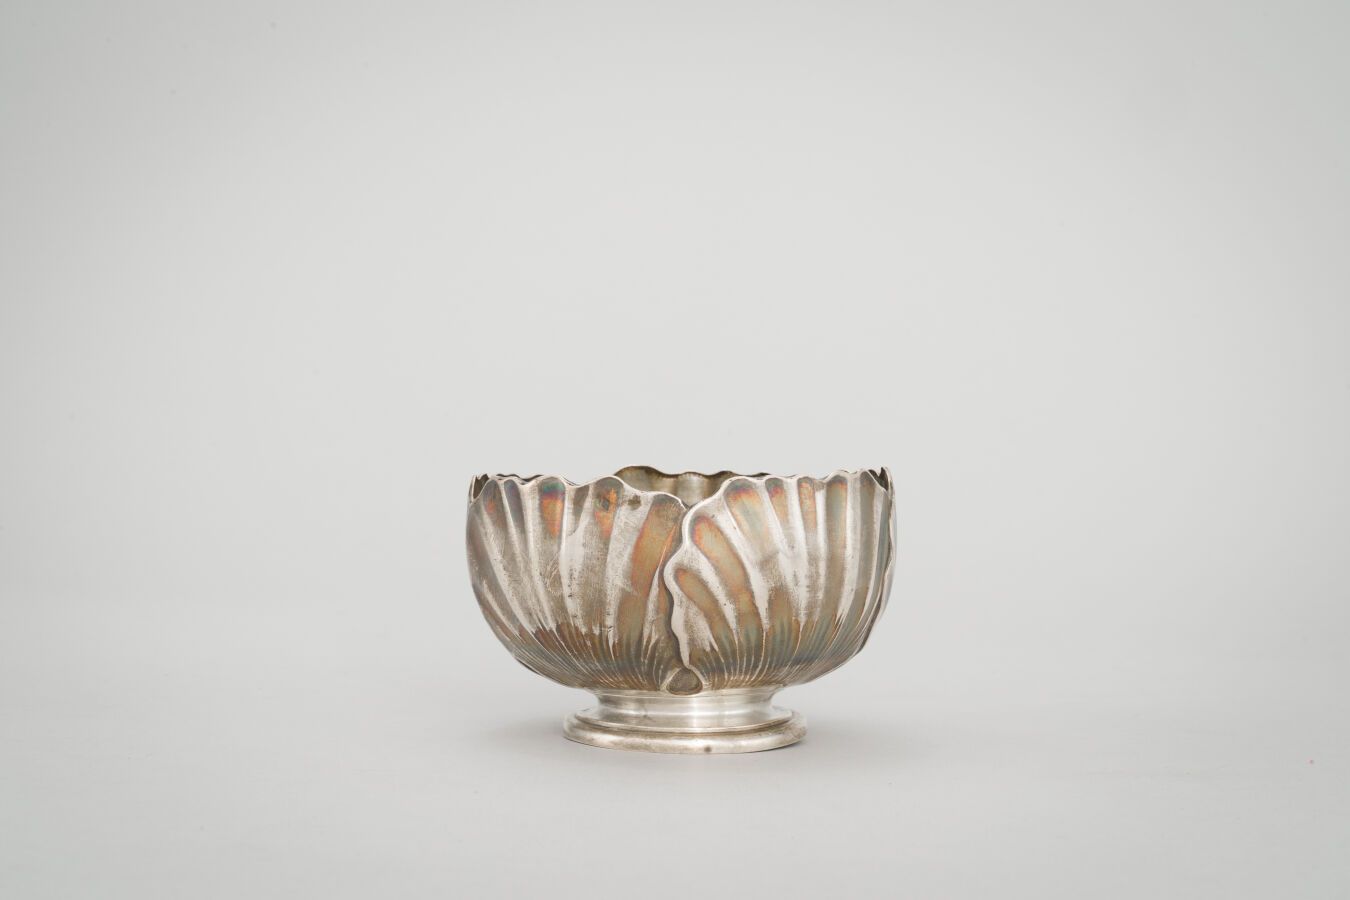 Null 62.一个银制（950/1000）袖珍杯，由风格化的叶子和叠加而成。

约1900年。

(凹痕)。

总毛重：102克 - 高度：6厘米